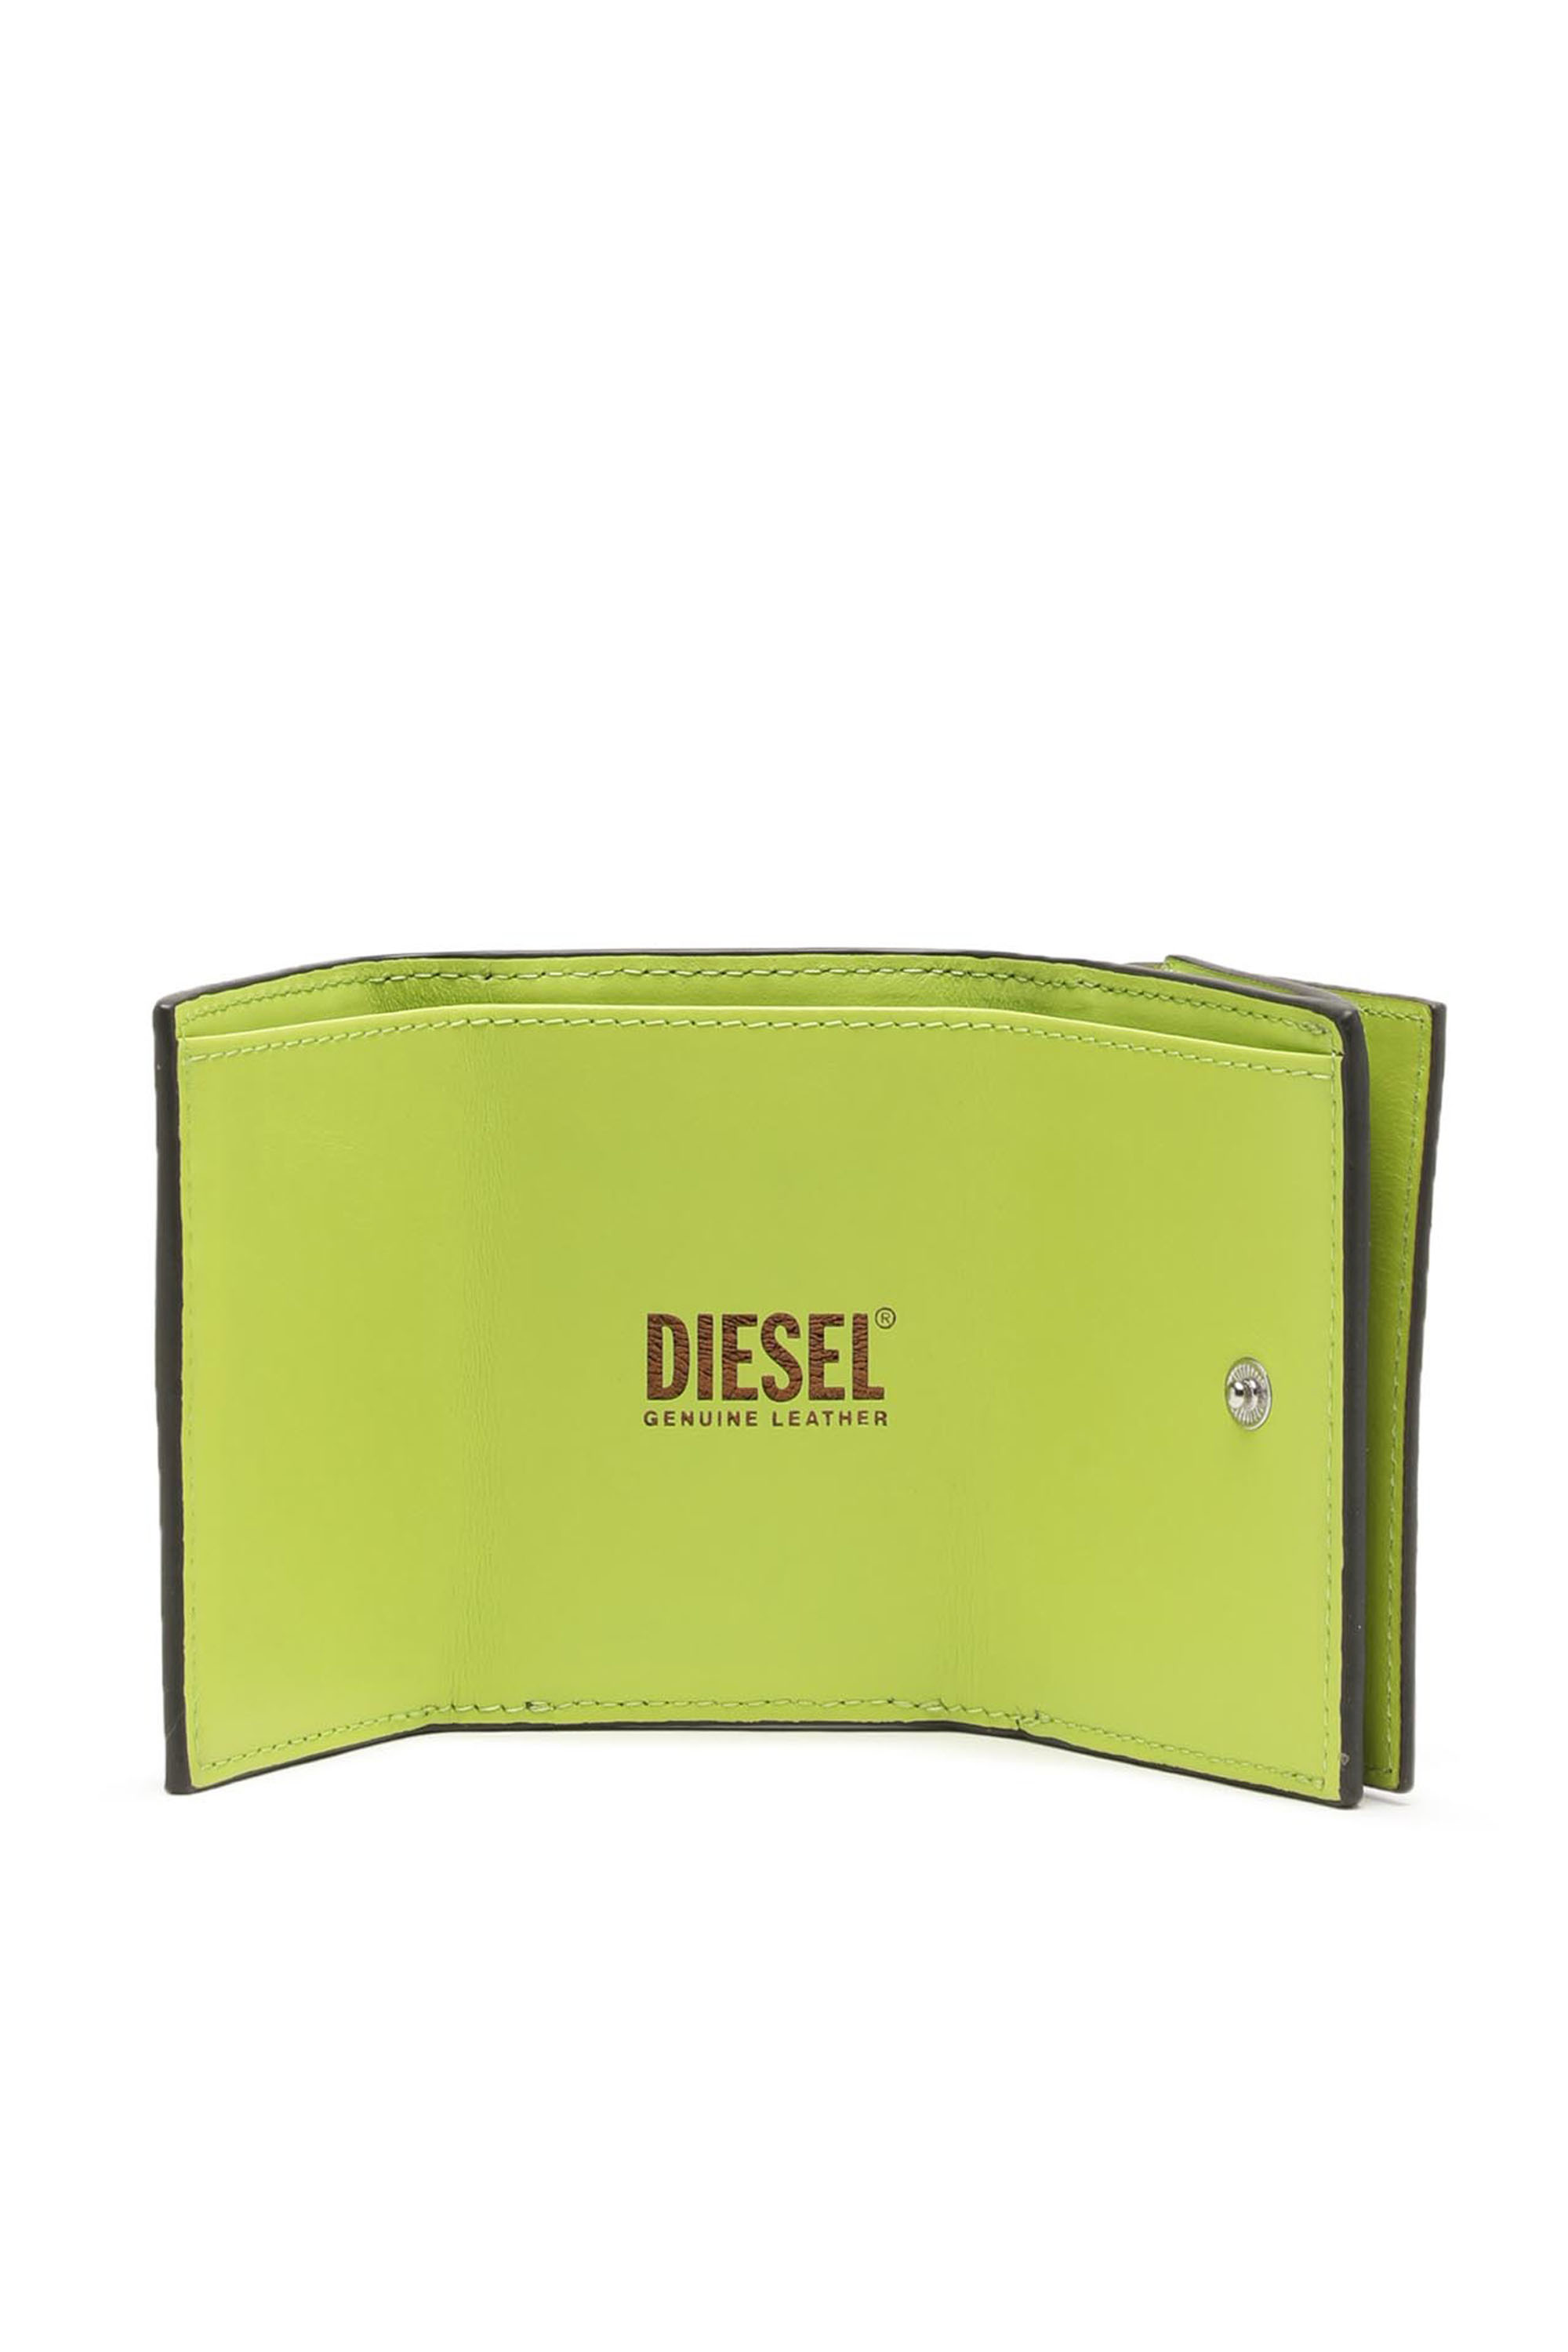 Diesel - TRI-FOLD COIN XS, ゴールド - Image 3